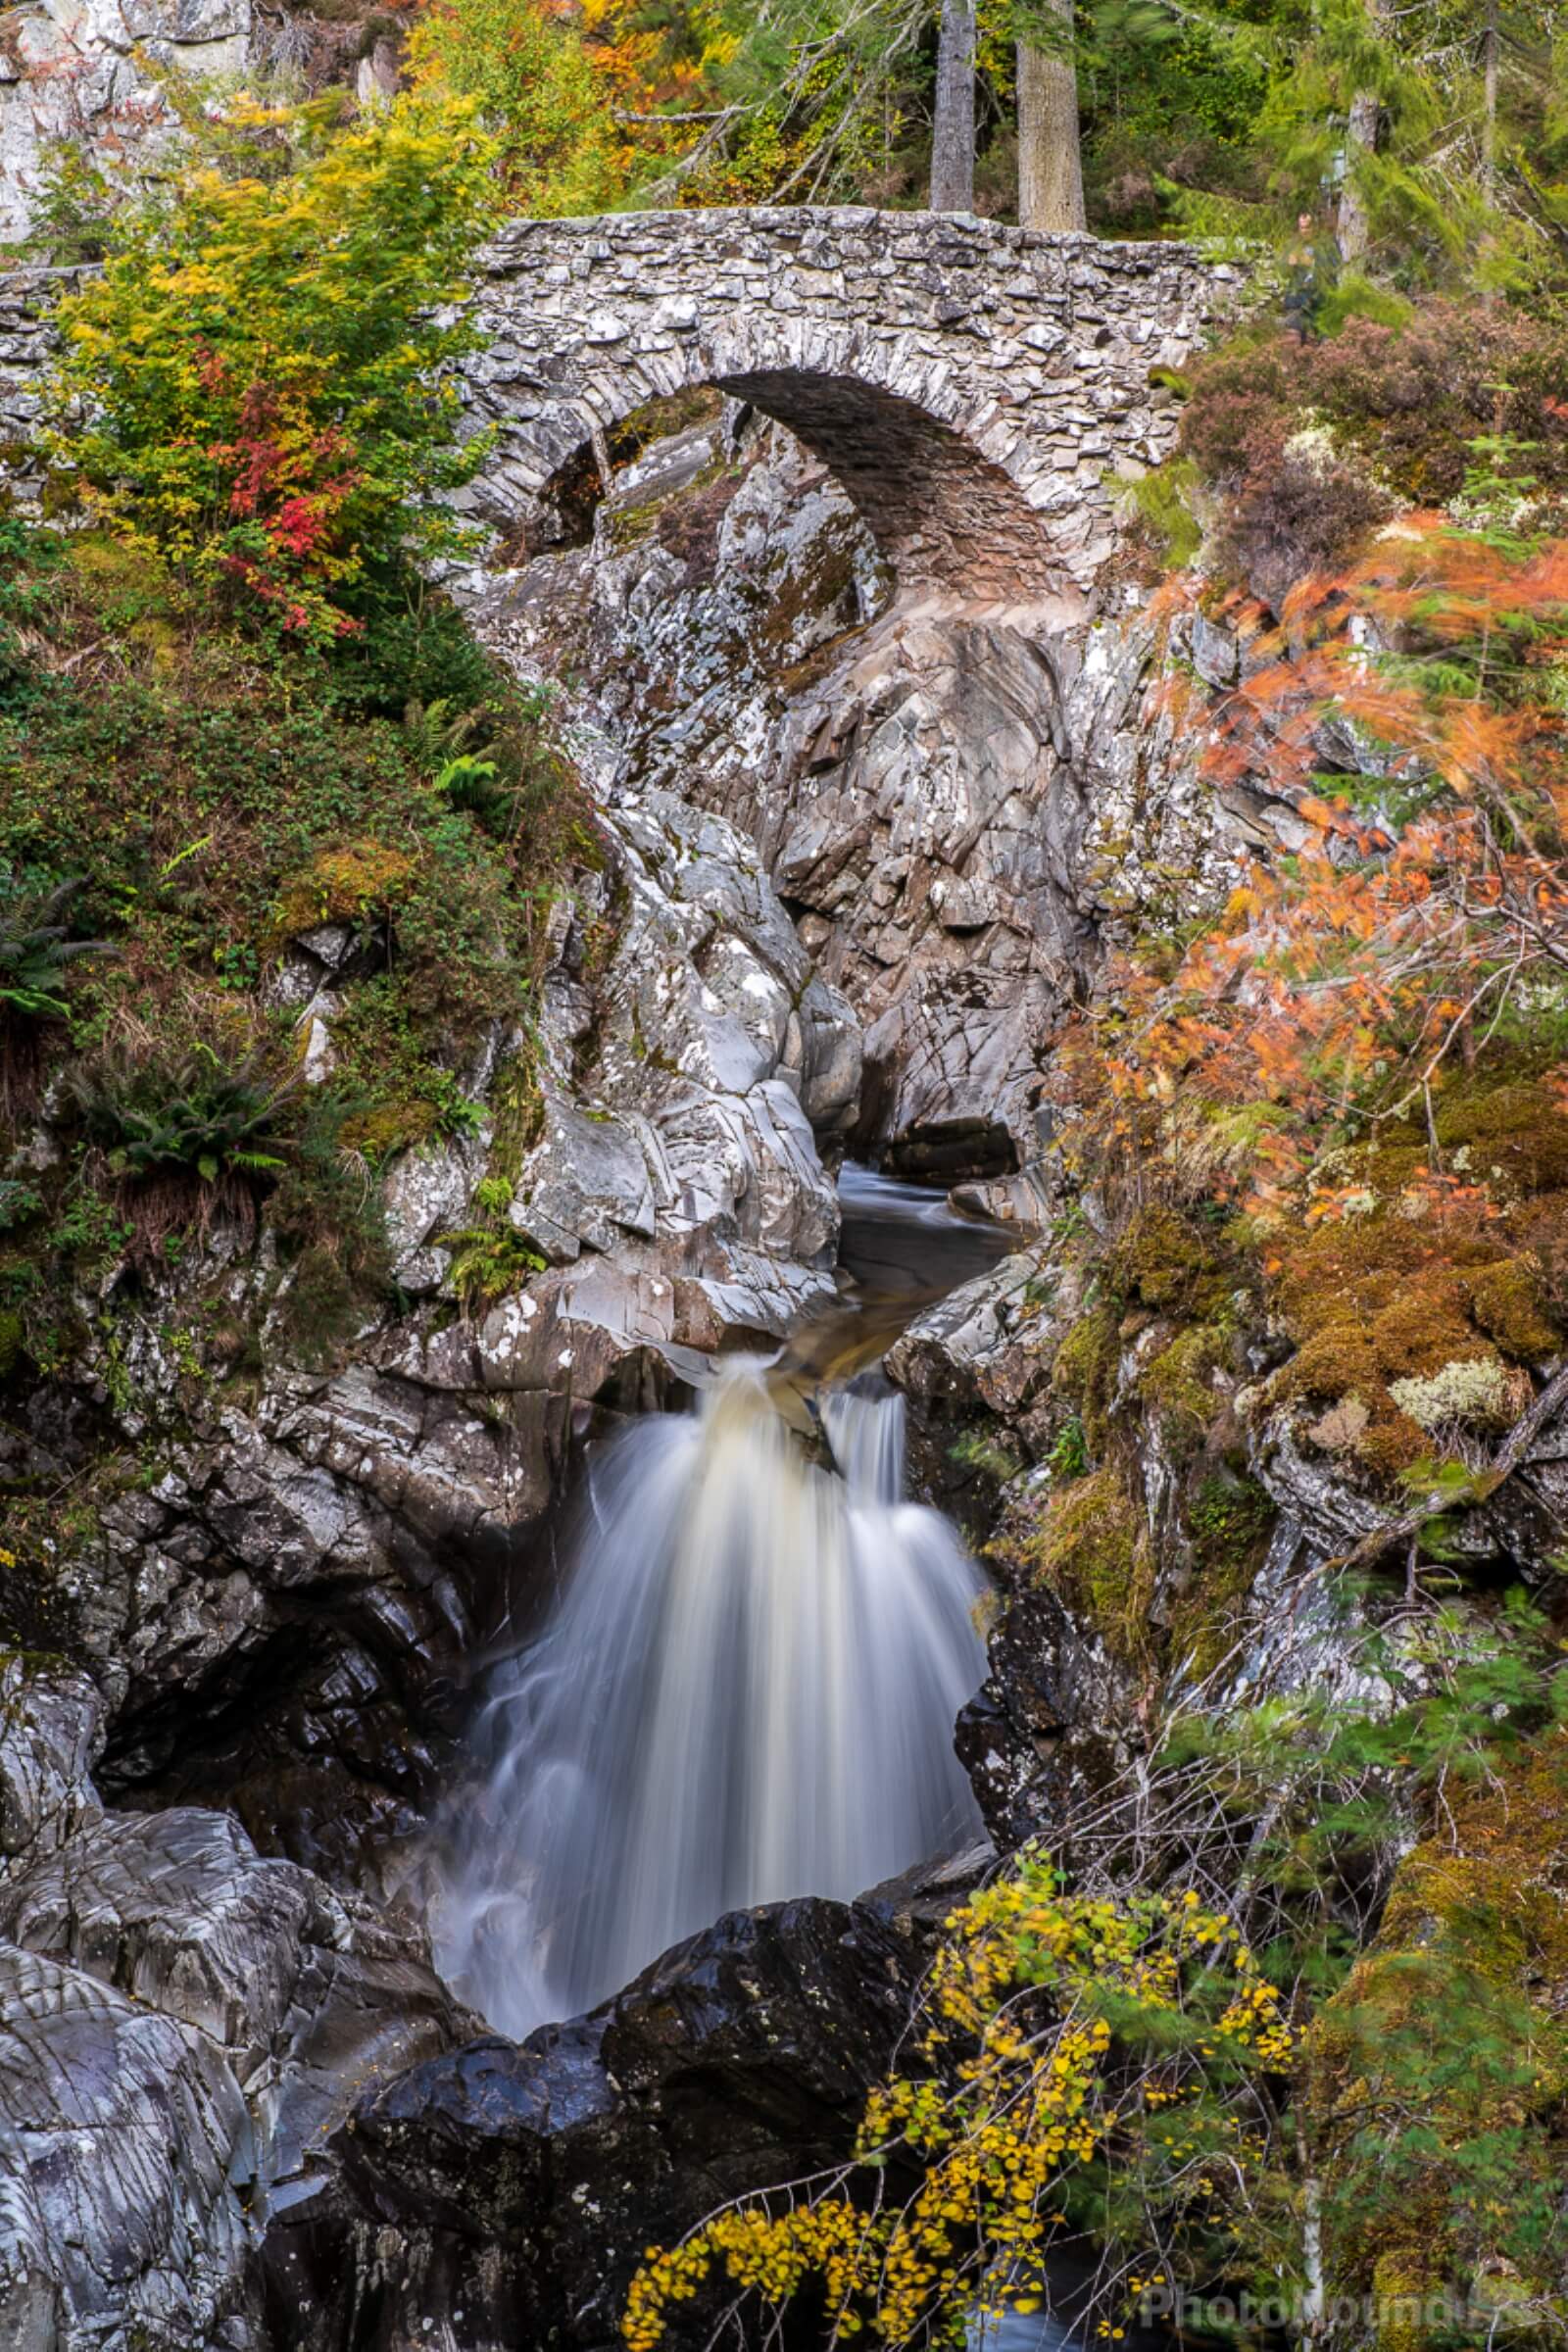 Image of Falls of Bruar by James Billings.